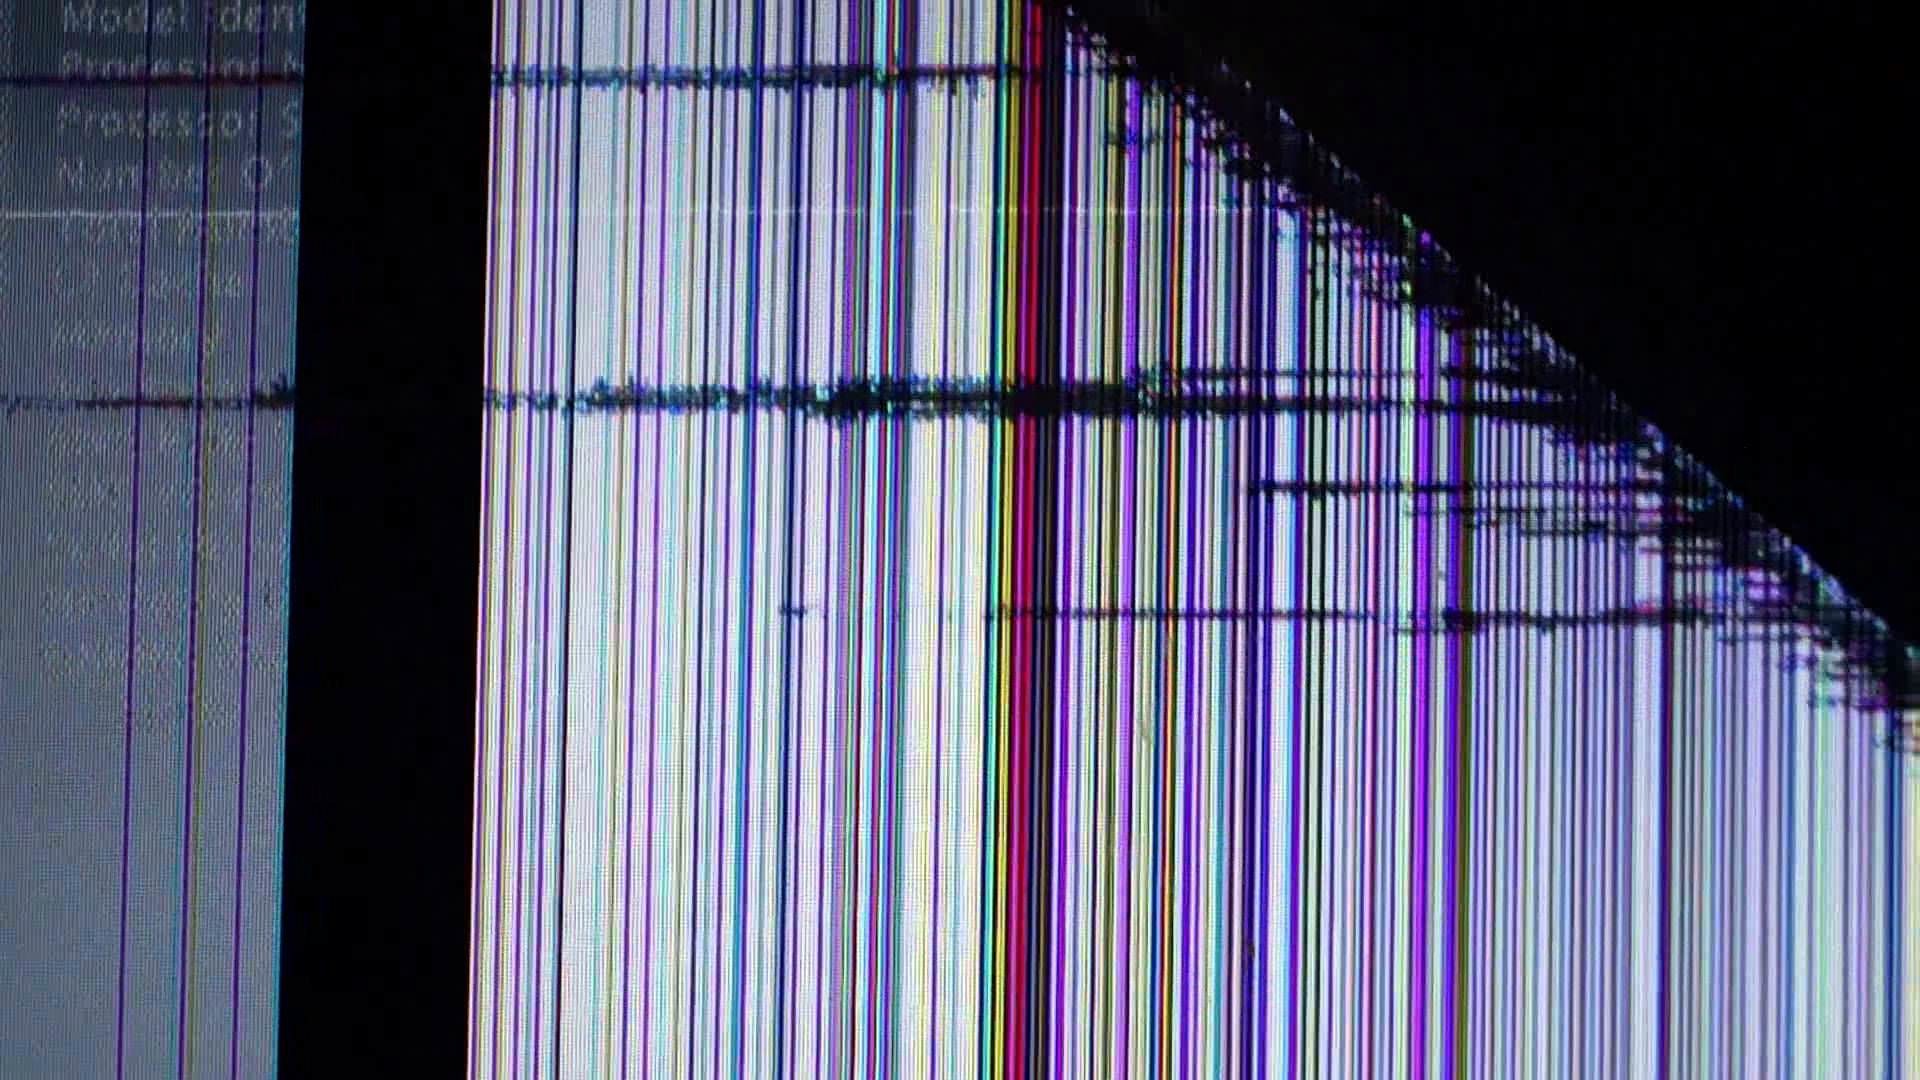 1920x1080 Broken Screen Wallpaper Prank For iPhone, iPod, Windows and Mac Laptop